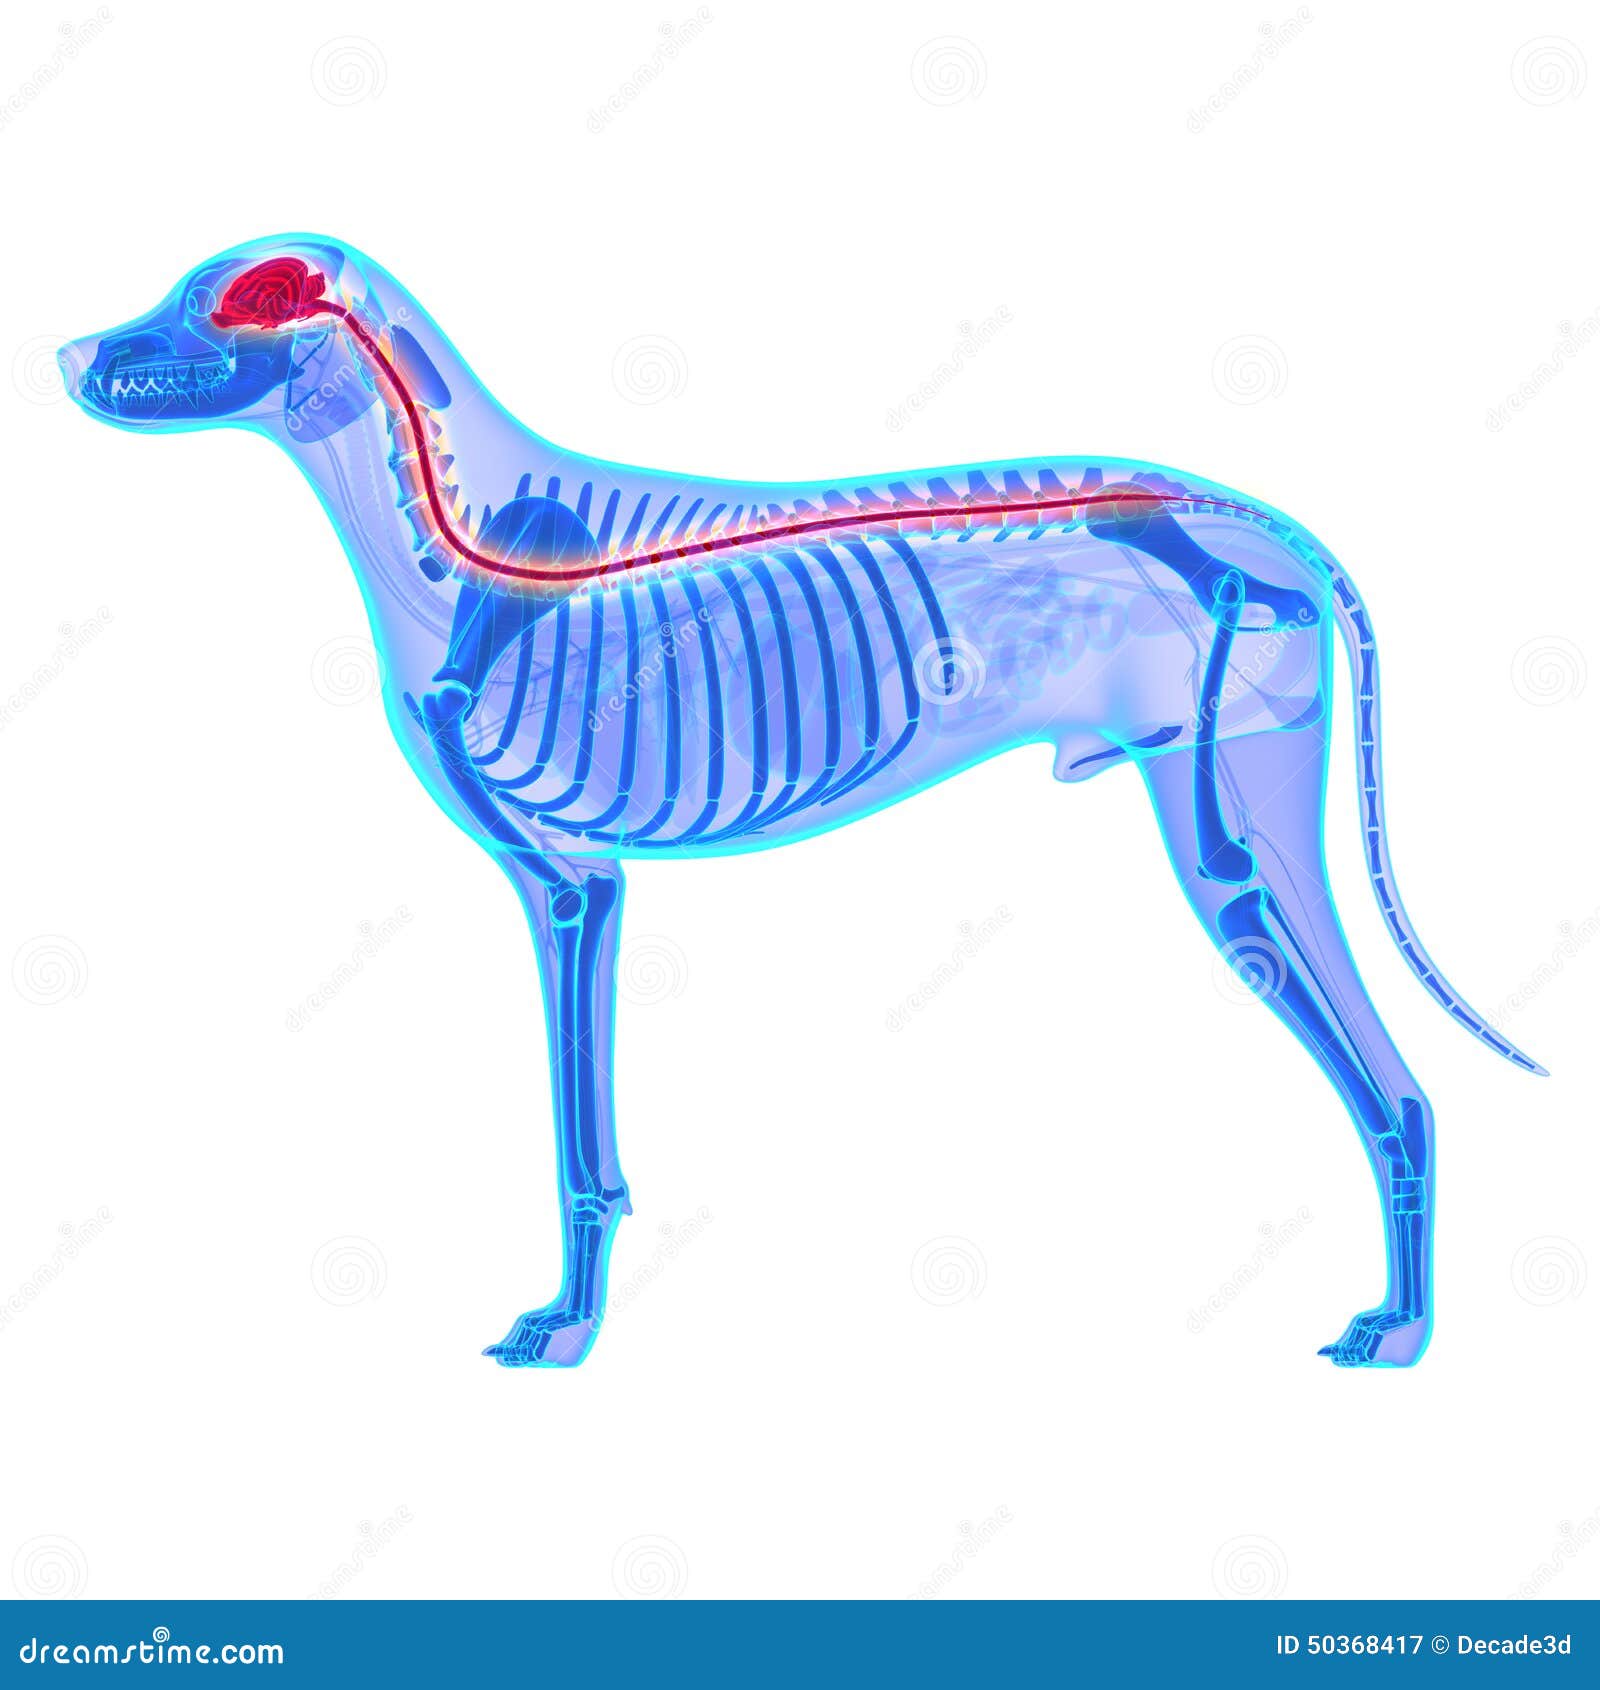 dog nervous system - canis lupus familiaris anatomy -  o